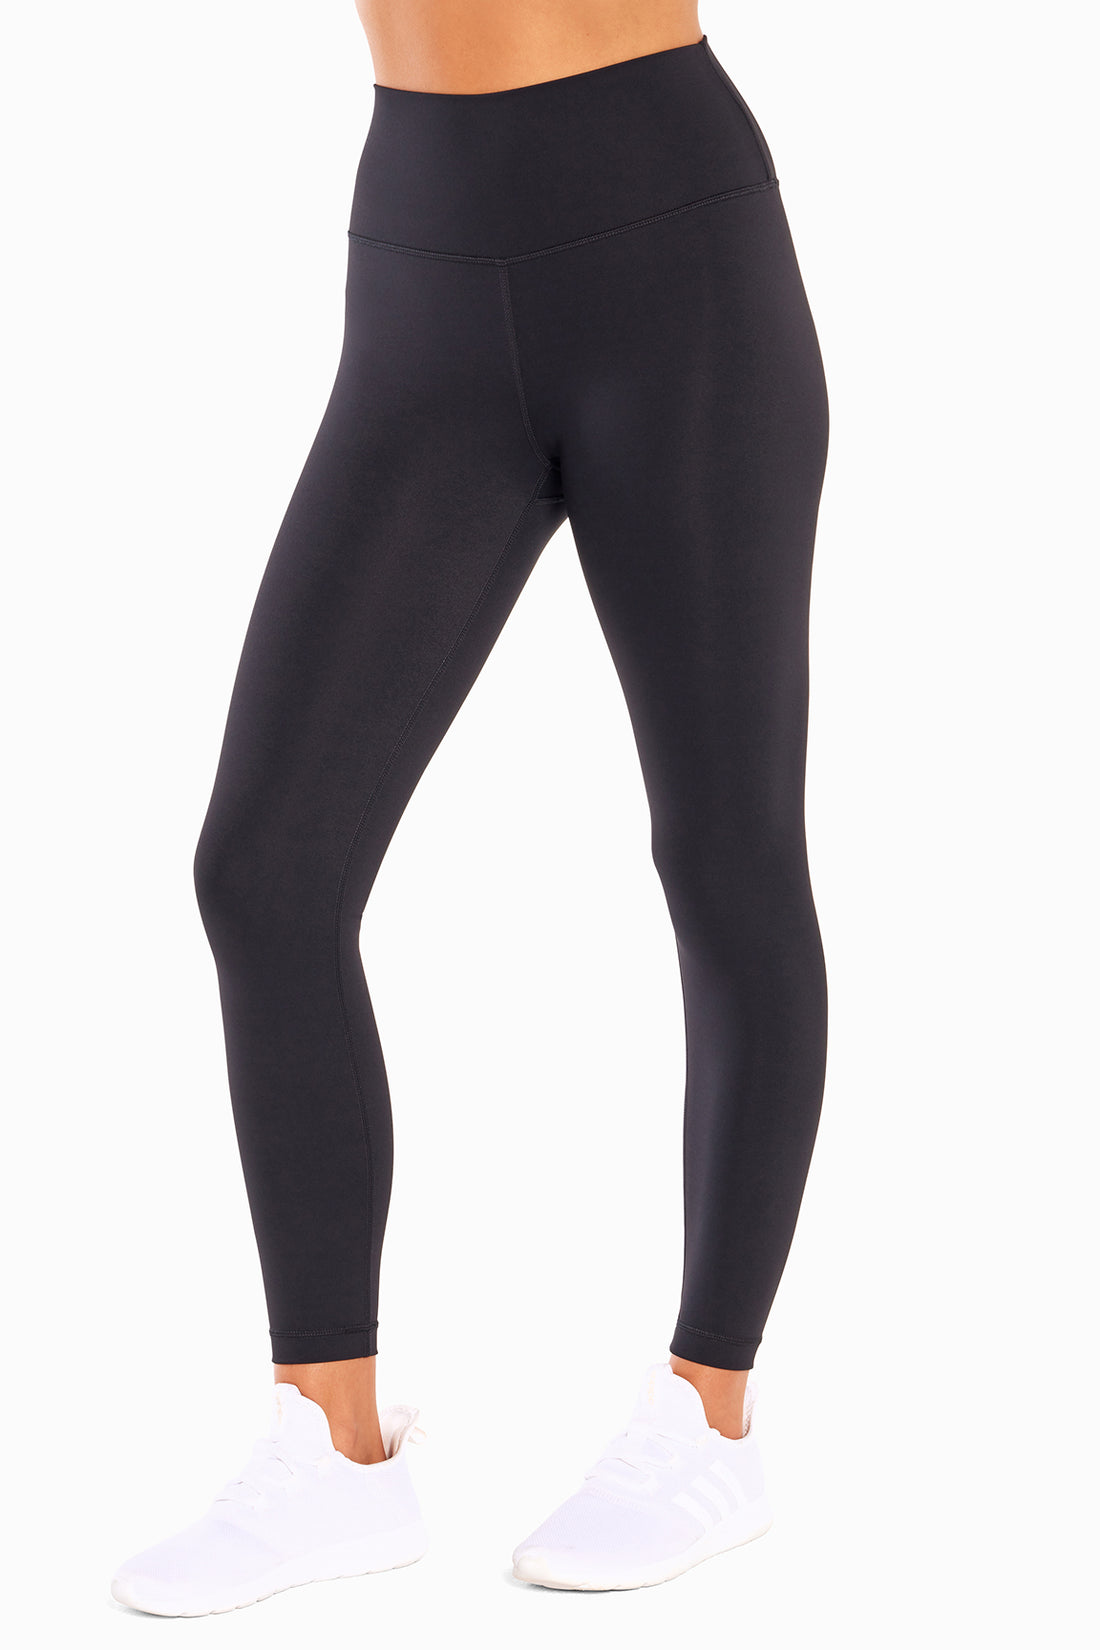 TSLA Women's Capri Yoga Leggings, Mid/High Waist Tummy Control Workout  Leggings, Athletic Yoga Trousers Pants, Capris Pocket Peachy Dark Plum, XS  : : Fashion